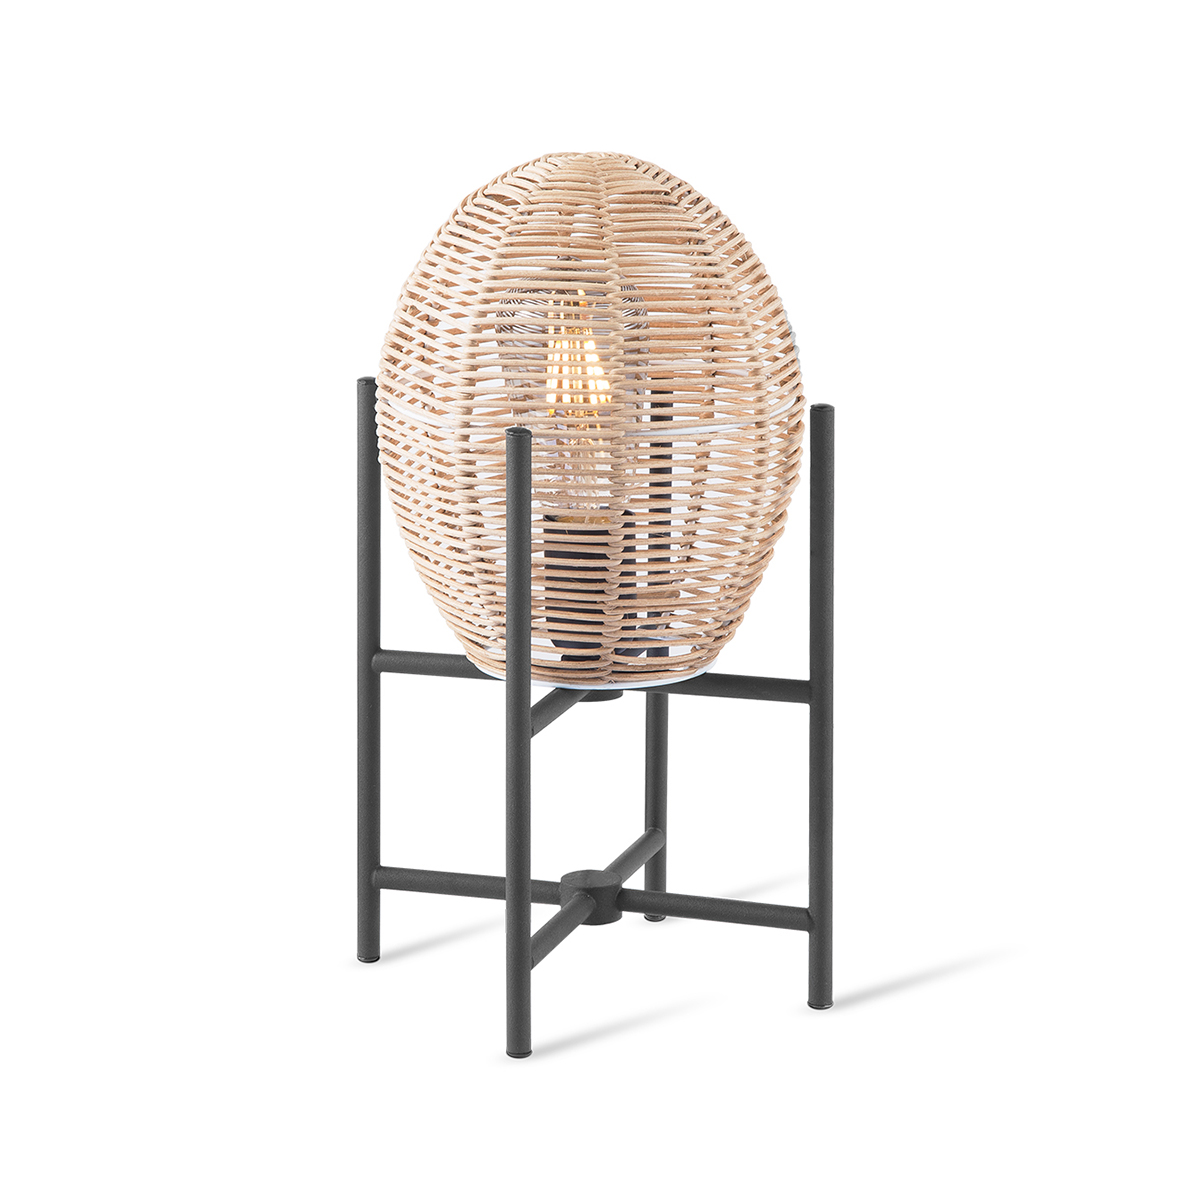 Tangla lighting - TLT1001-01BK - LED table lamp 1 Light - metal and cane in natural and black - globe medium - E27